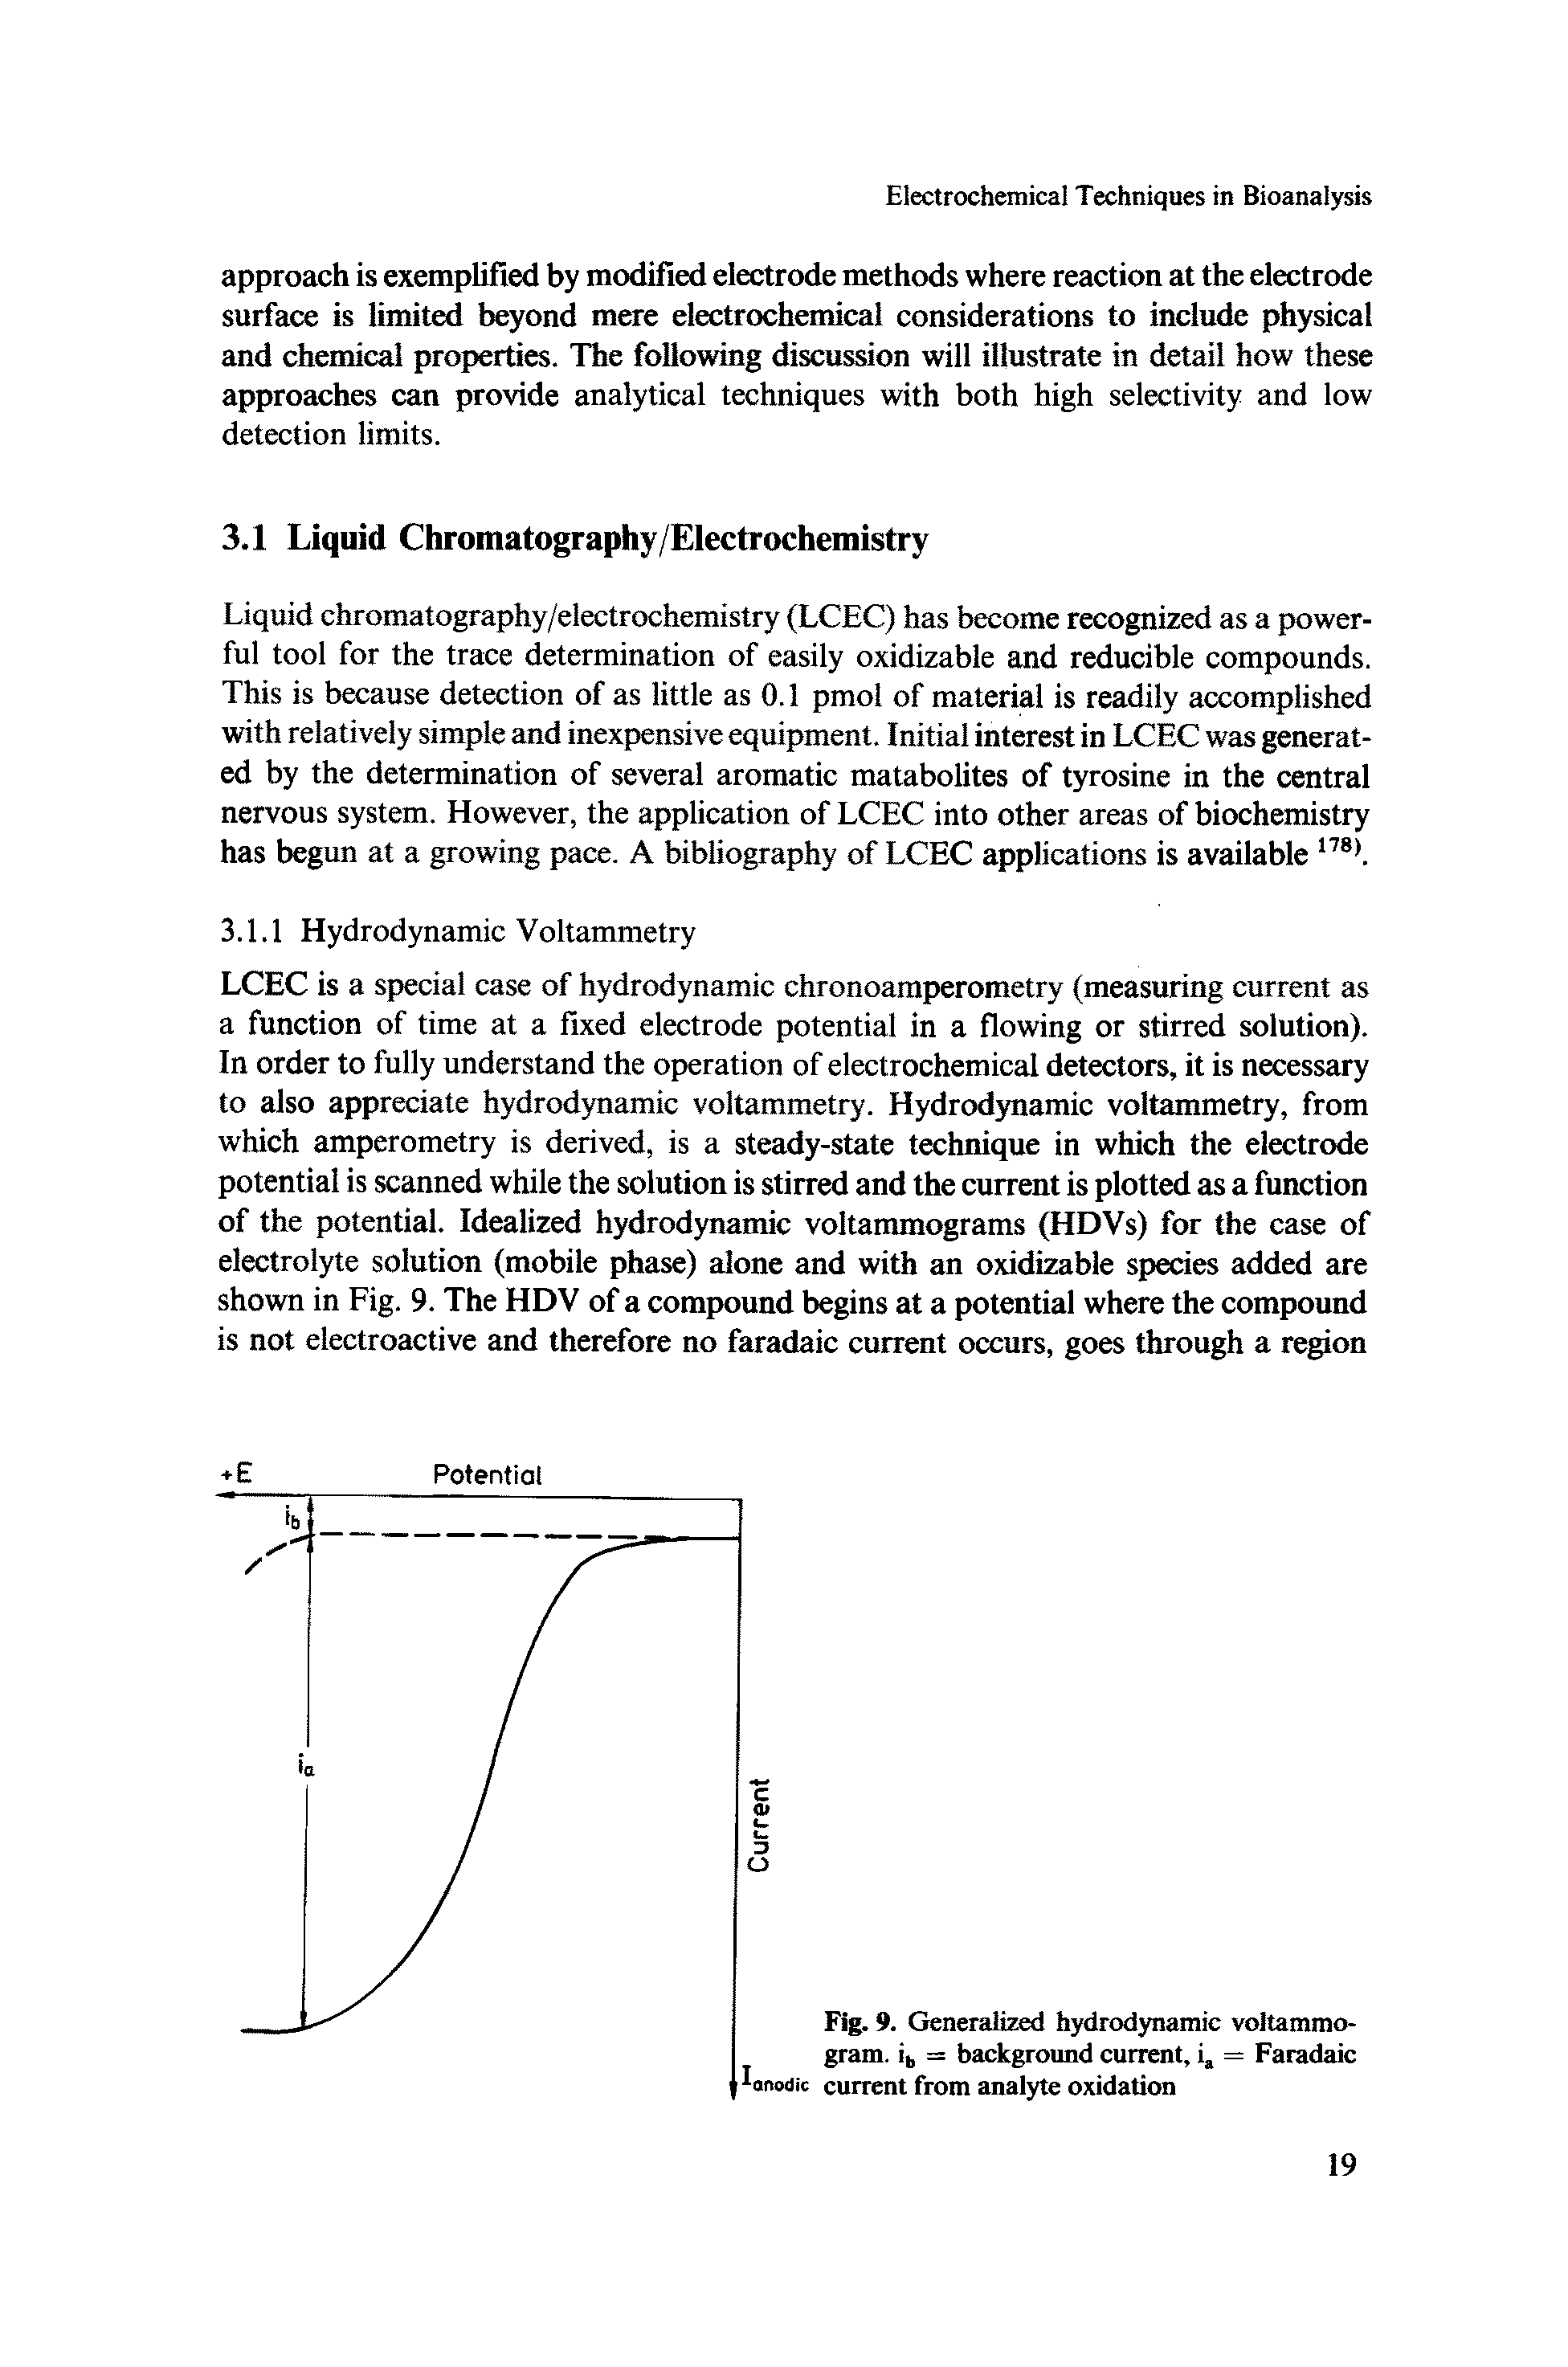 Fig. 9. Generalized hydrodynamic voltammo-gram. i, = background current, i, = Faradaic onodic current from analyte oxidation...